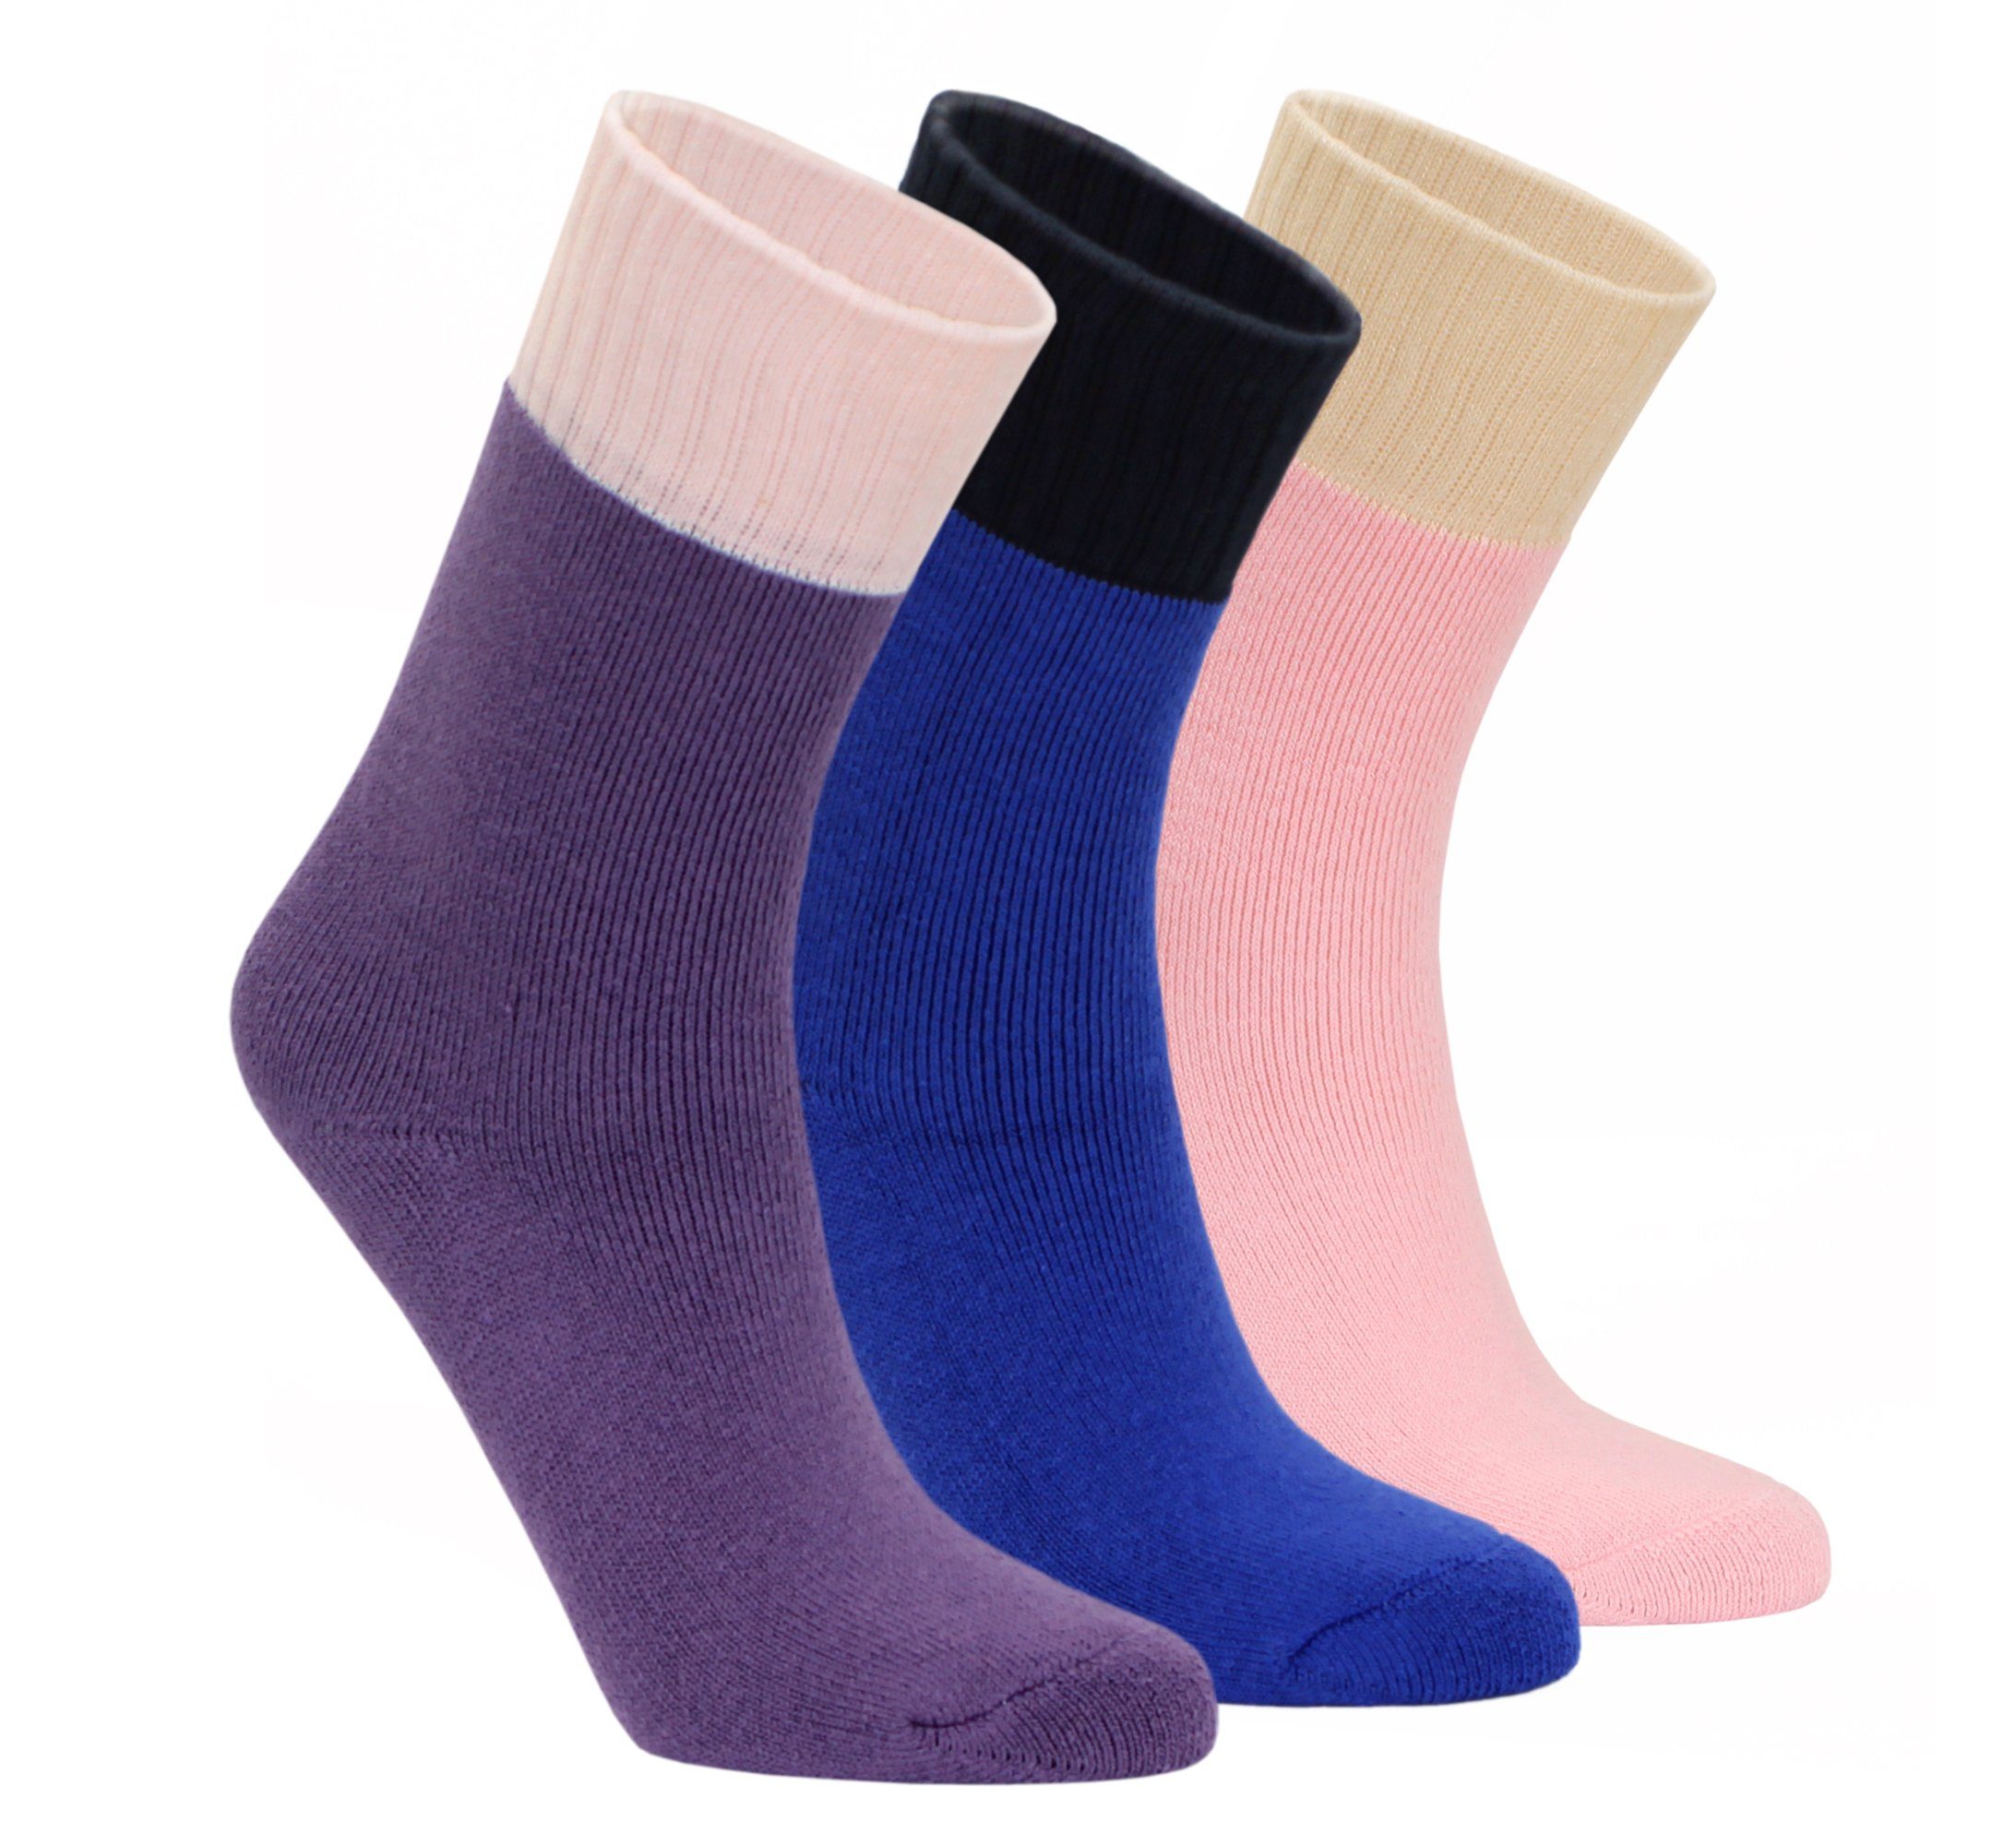 NoblesBox Thermosocken Damen Wintersocken (Beutel, 3-Paar, 37-40 EU Größe) Damen Warme Socken, Damen Arbeitssocken